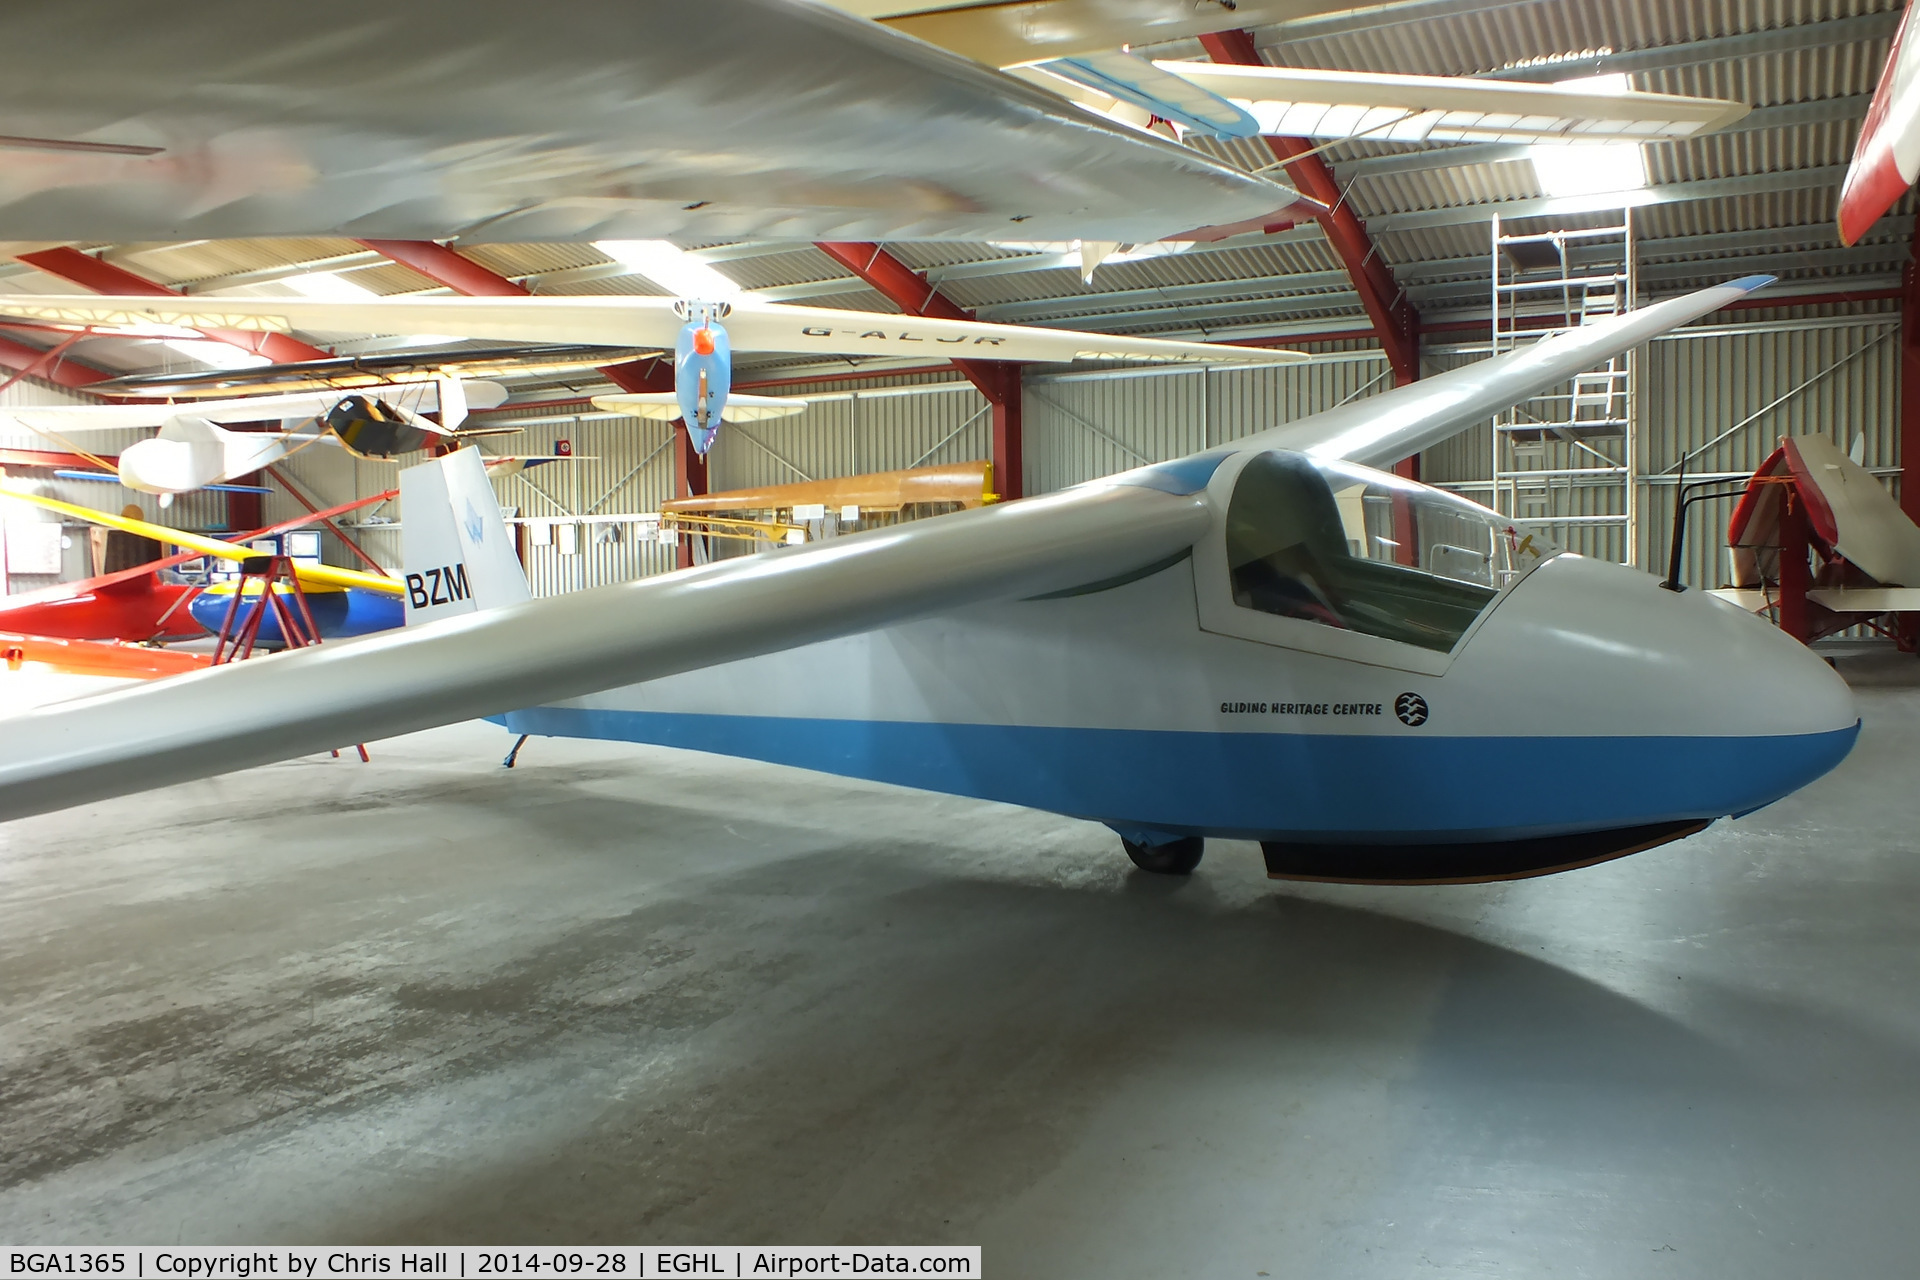 BGA1365, 1967 Slingsby T.45 Swallow C/N 1597, Gliding Heritage Centre, Lasham